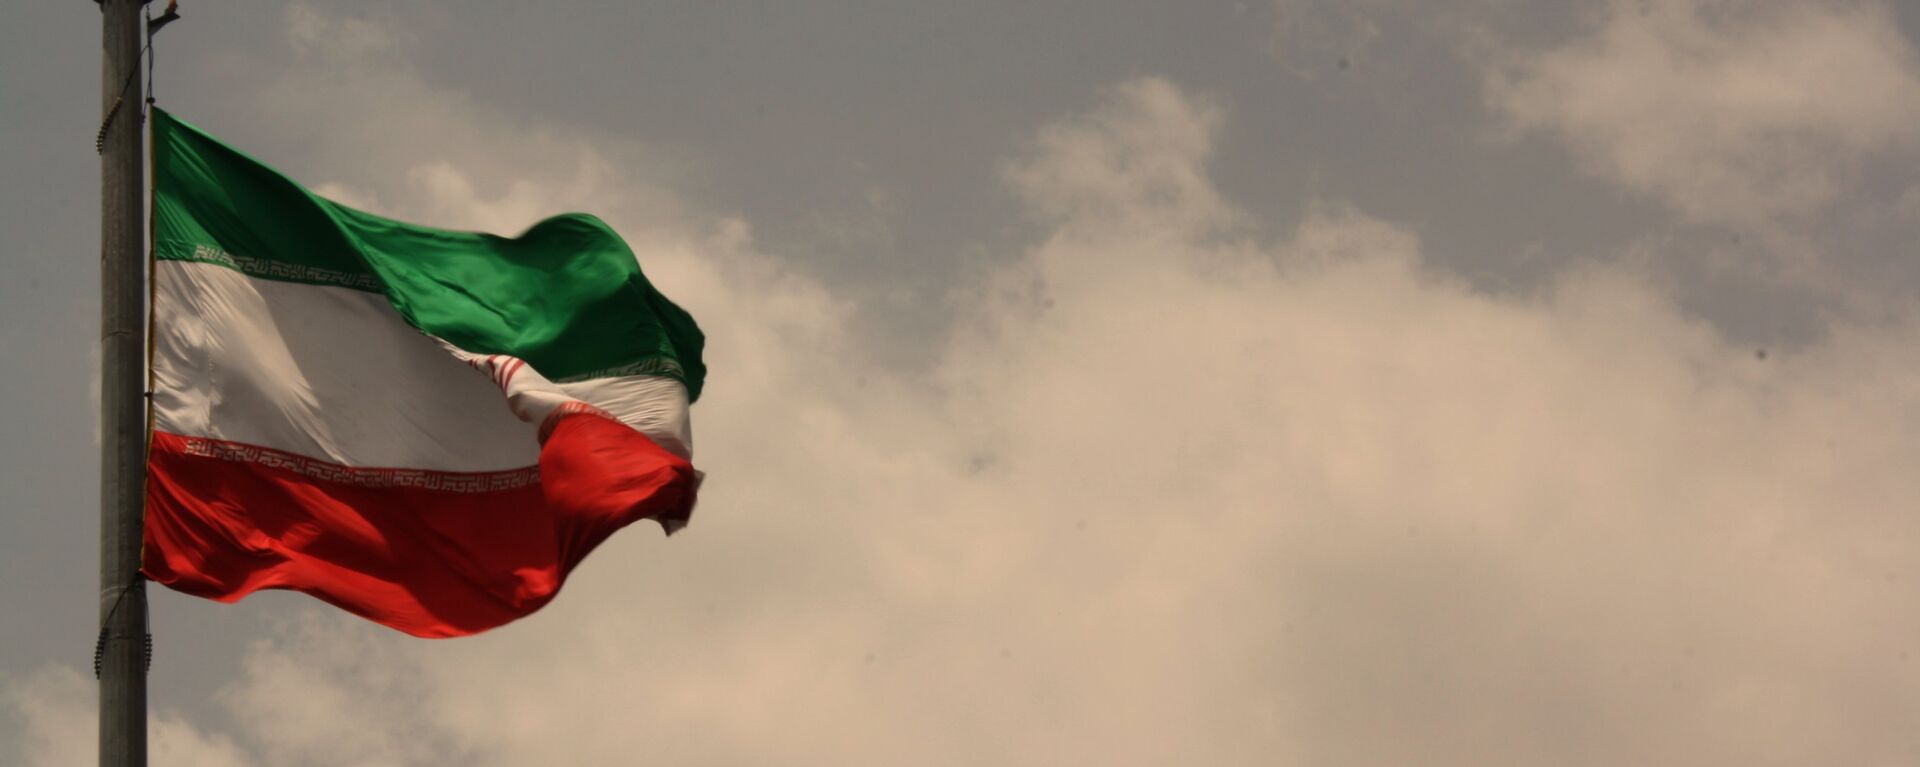 La bandera de Irán - Sputnik Mundo, 1920, 25.07.2021